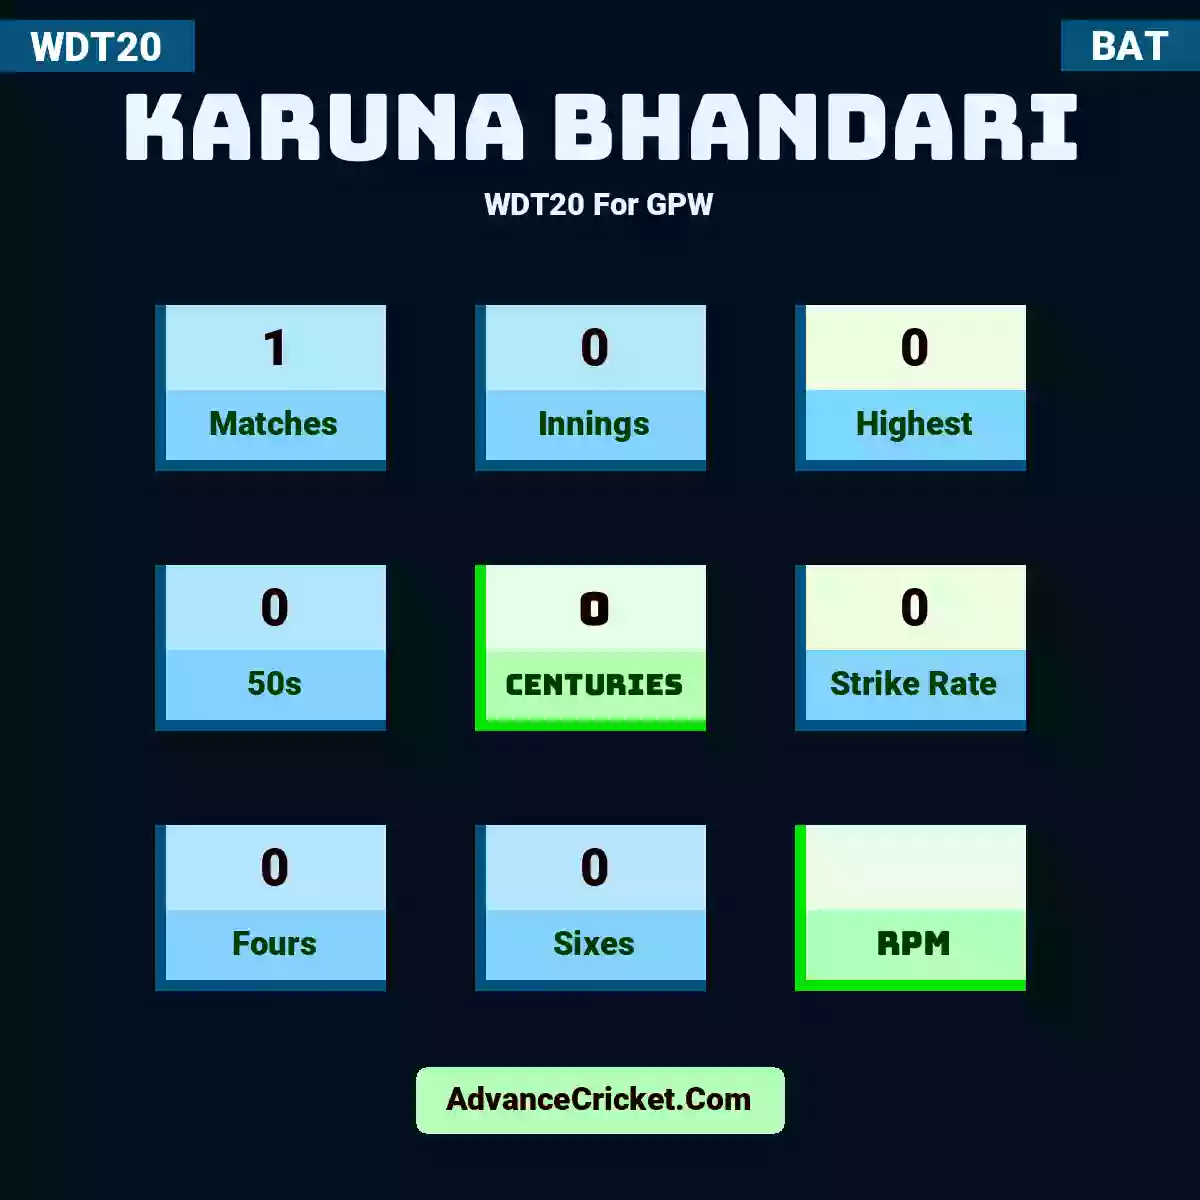 Karuna Bhandari WDT20  For GPW, Karuna Bhandari played 1 matches, scored 0 runs as highest, 0 half-centuries, and 0 centuries, with a strike rate of 0. K.Bhandari hit 0 fours and 0 sixes.